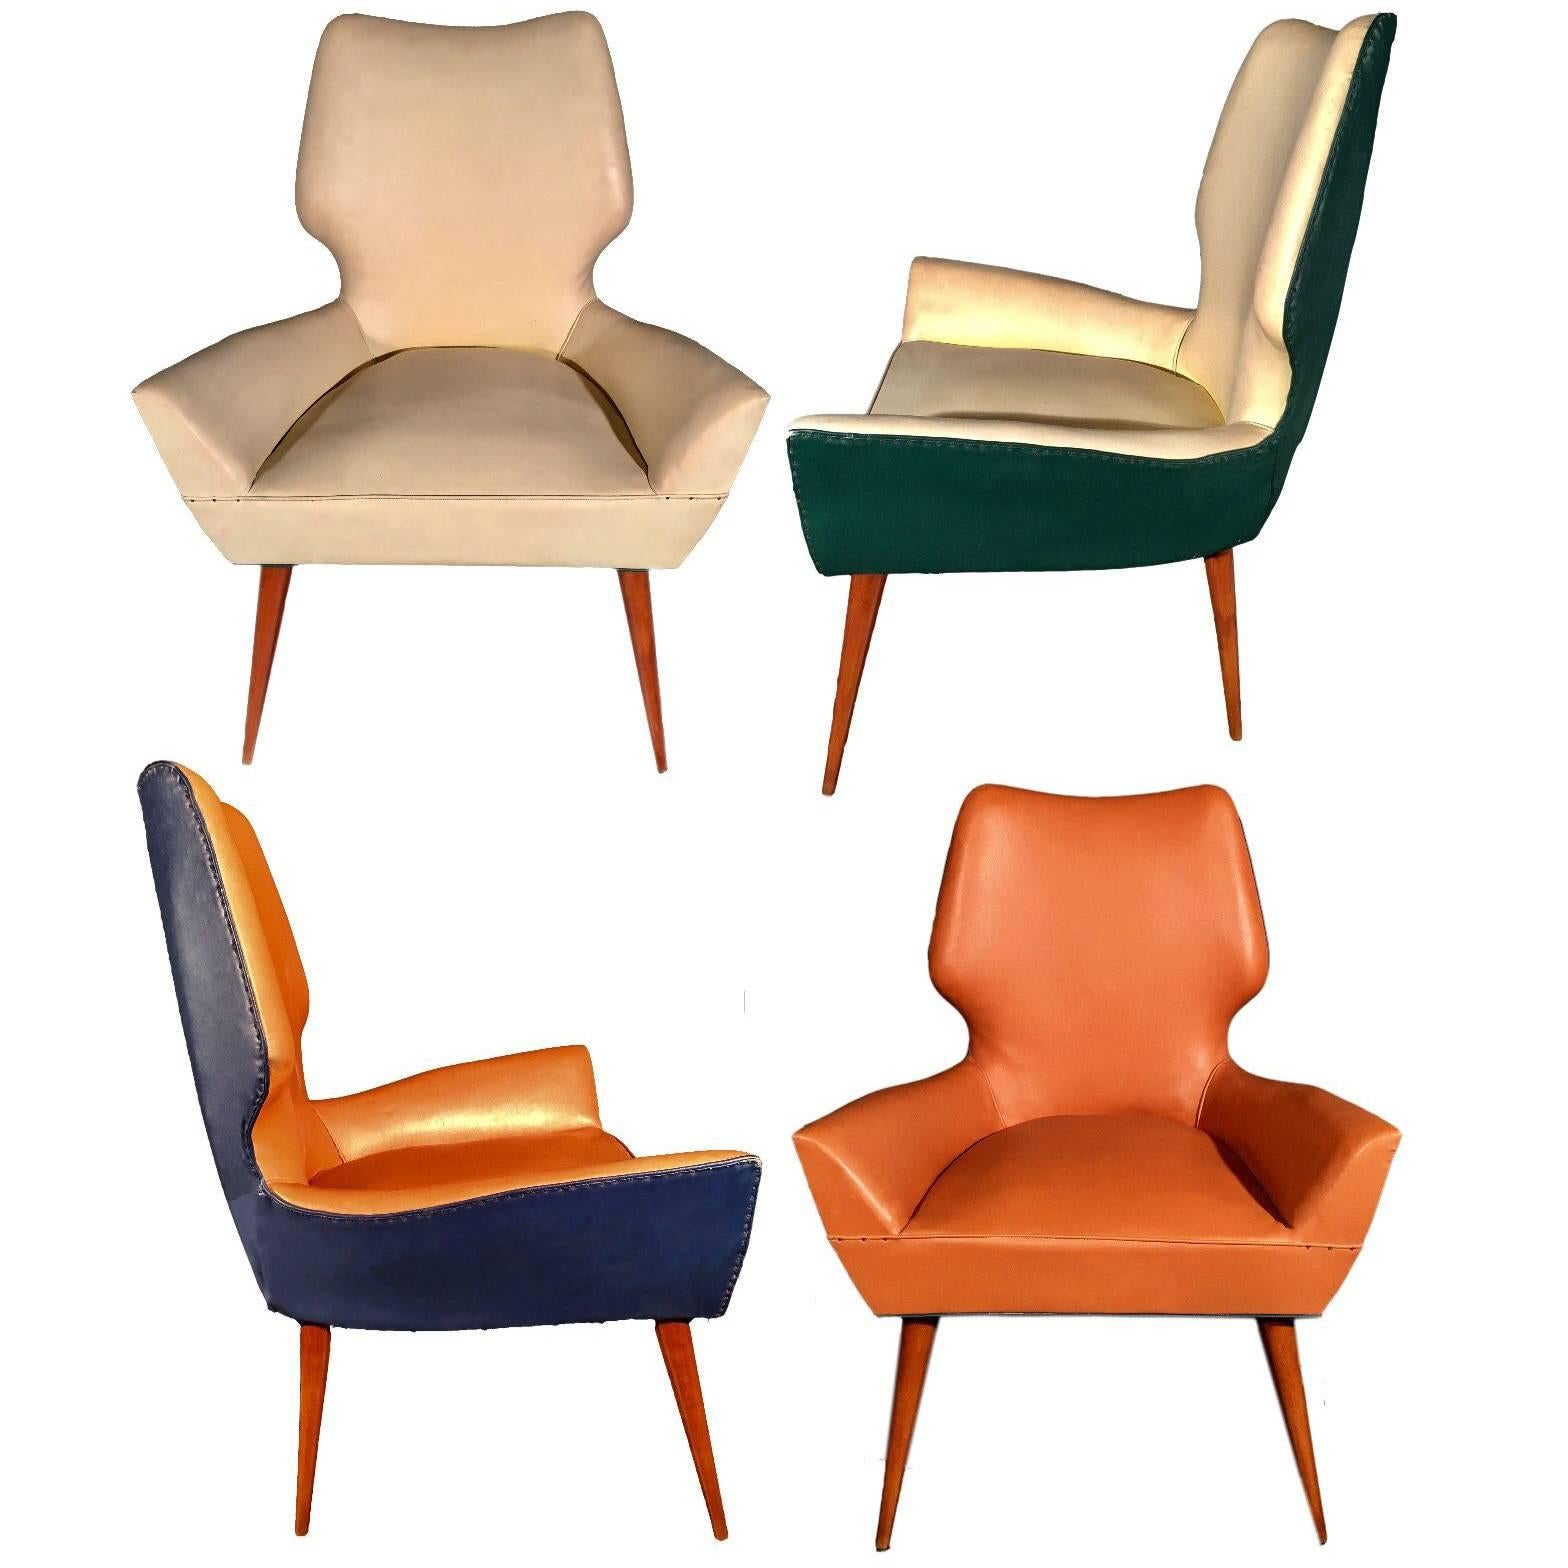 Pair of Mid-Century Modern Gio Ponti Style Chairs, 1950s